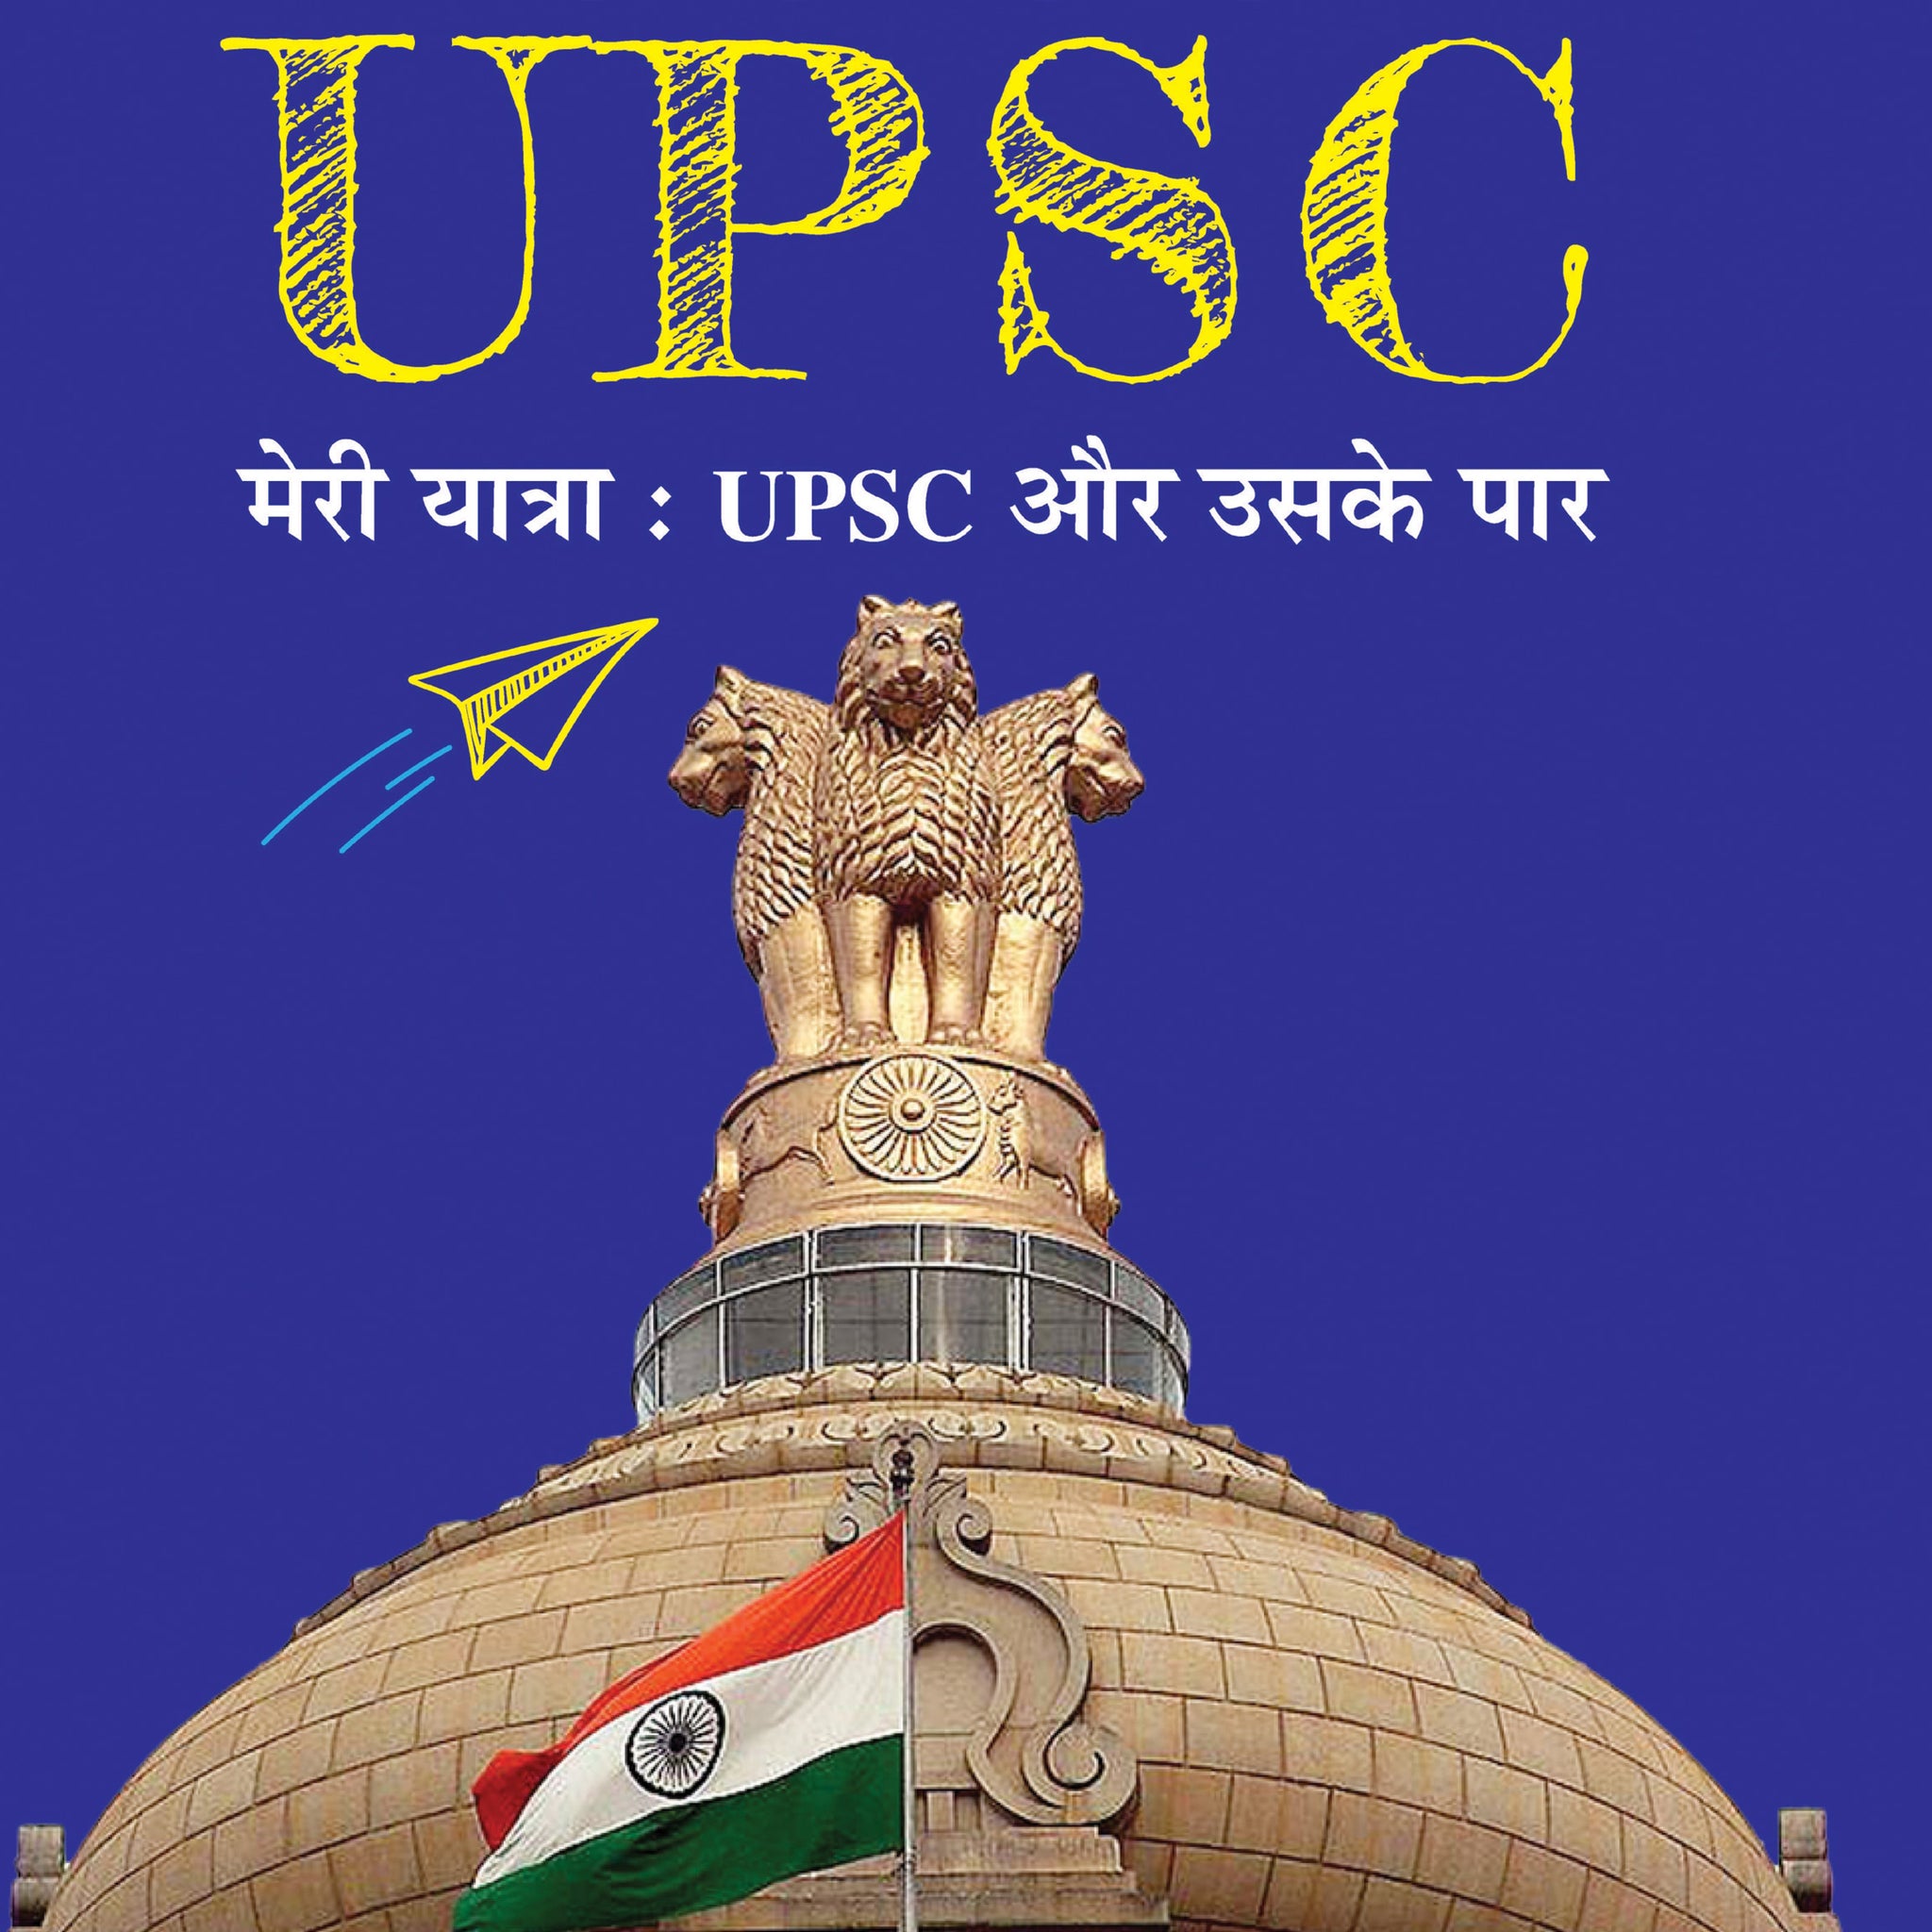 Mission UPSC - Meri Yatra: UPSC Aur Uske Paar (Hindi Translation of DECODE UPSC)